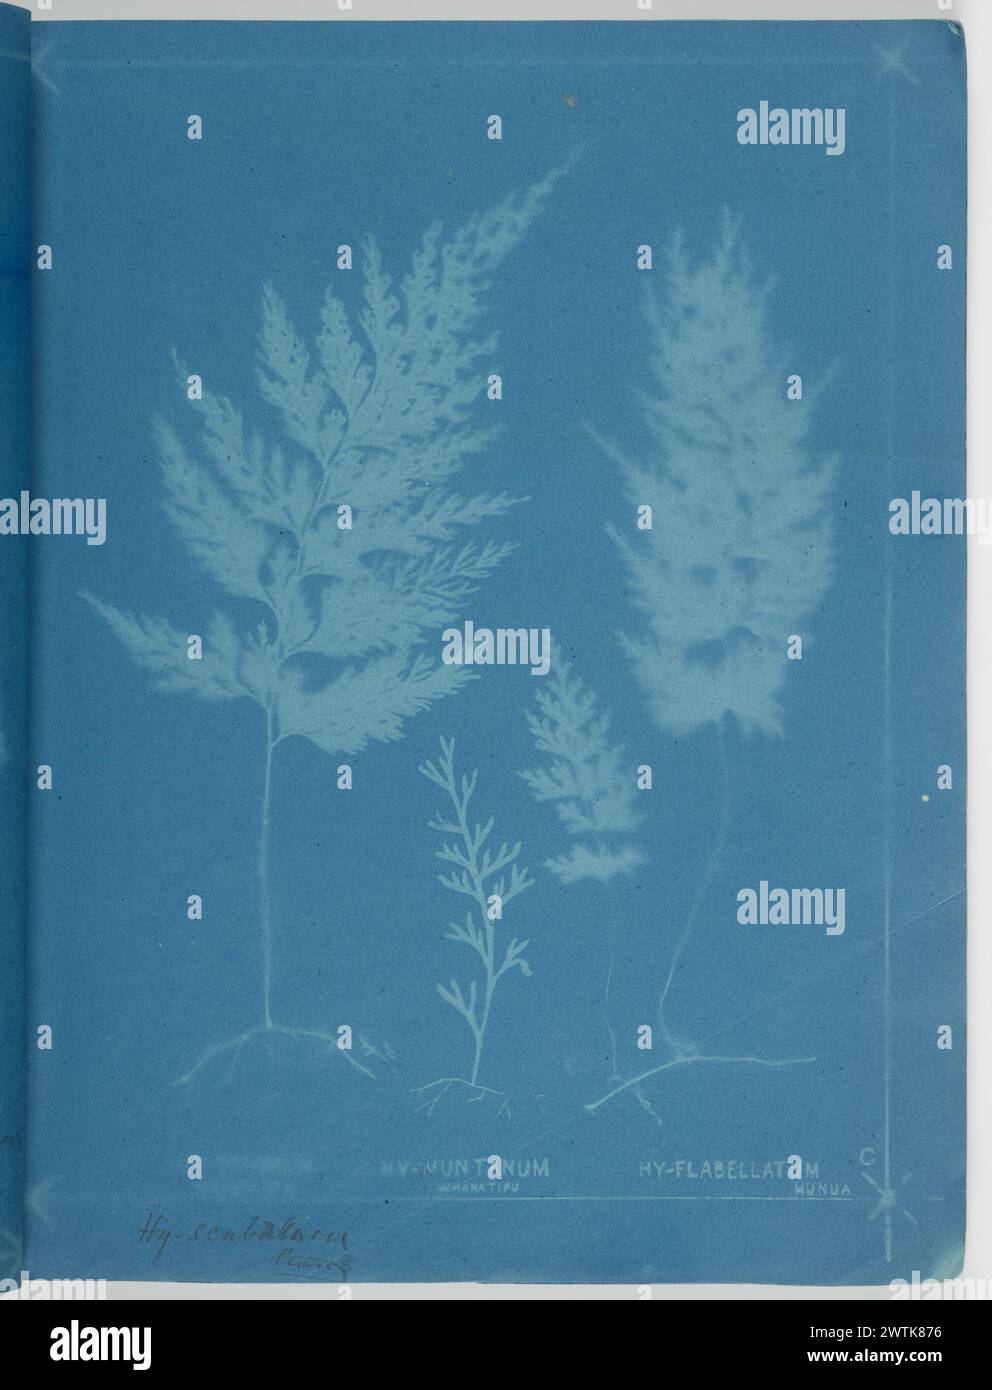 Hymenophyllum scabrum, Hymenophyllum muntanum, Whakatipu and Hymenophyllum flabellatum, Hunua. From the album: New Zealand ferns. 167 varieties photographic prints, cyanotypes Stock Photo